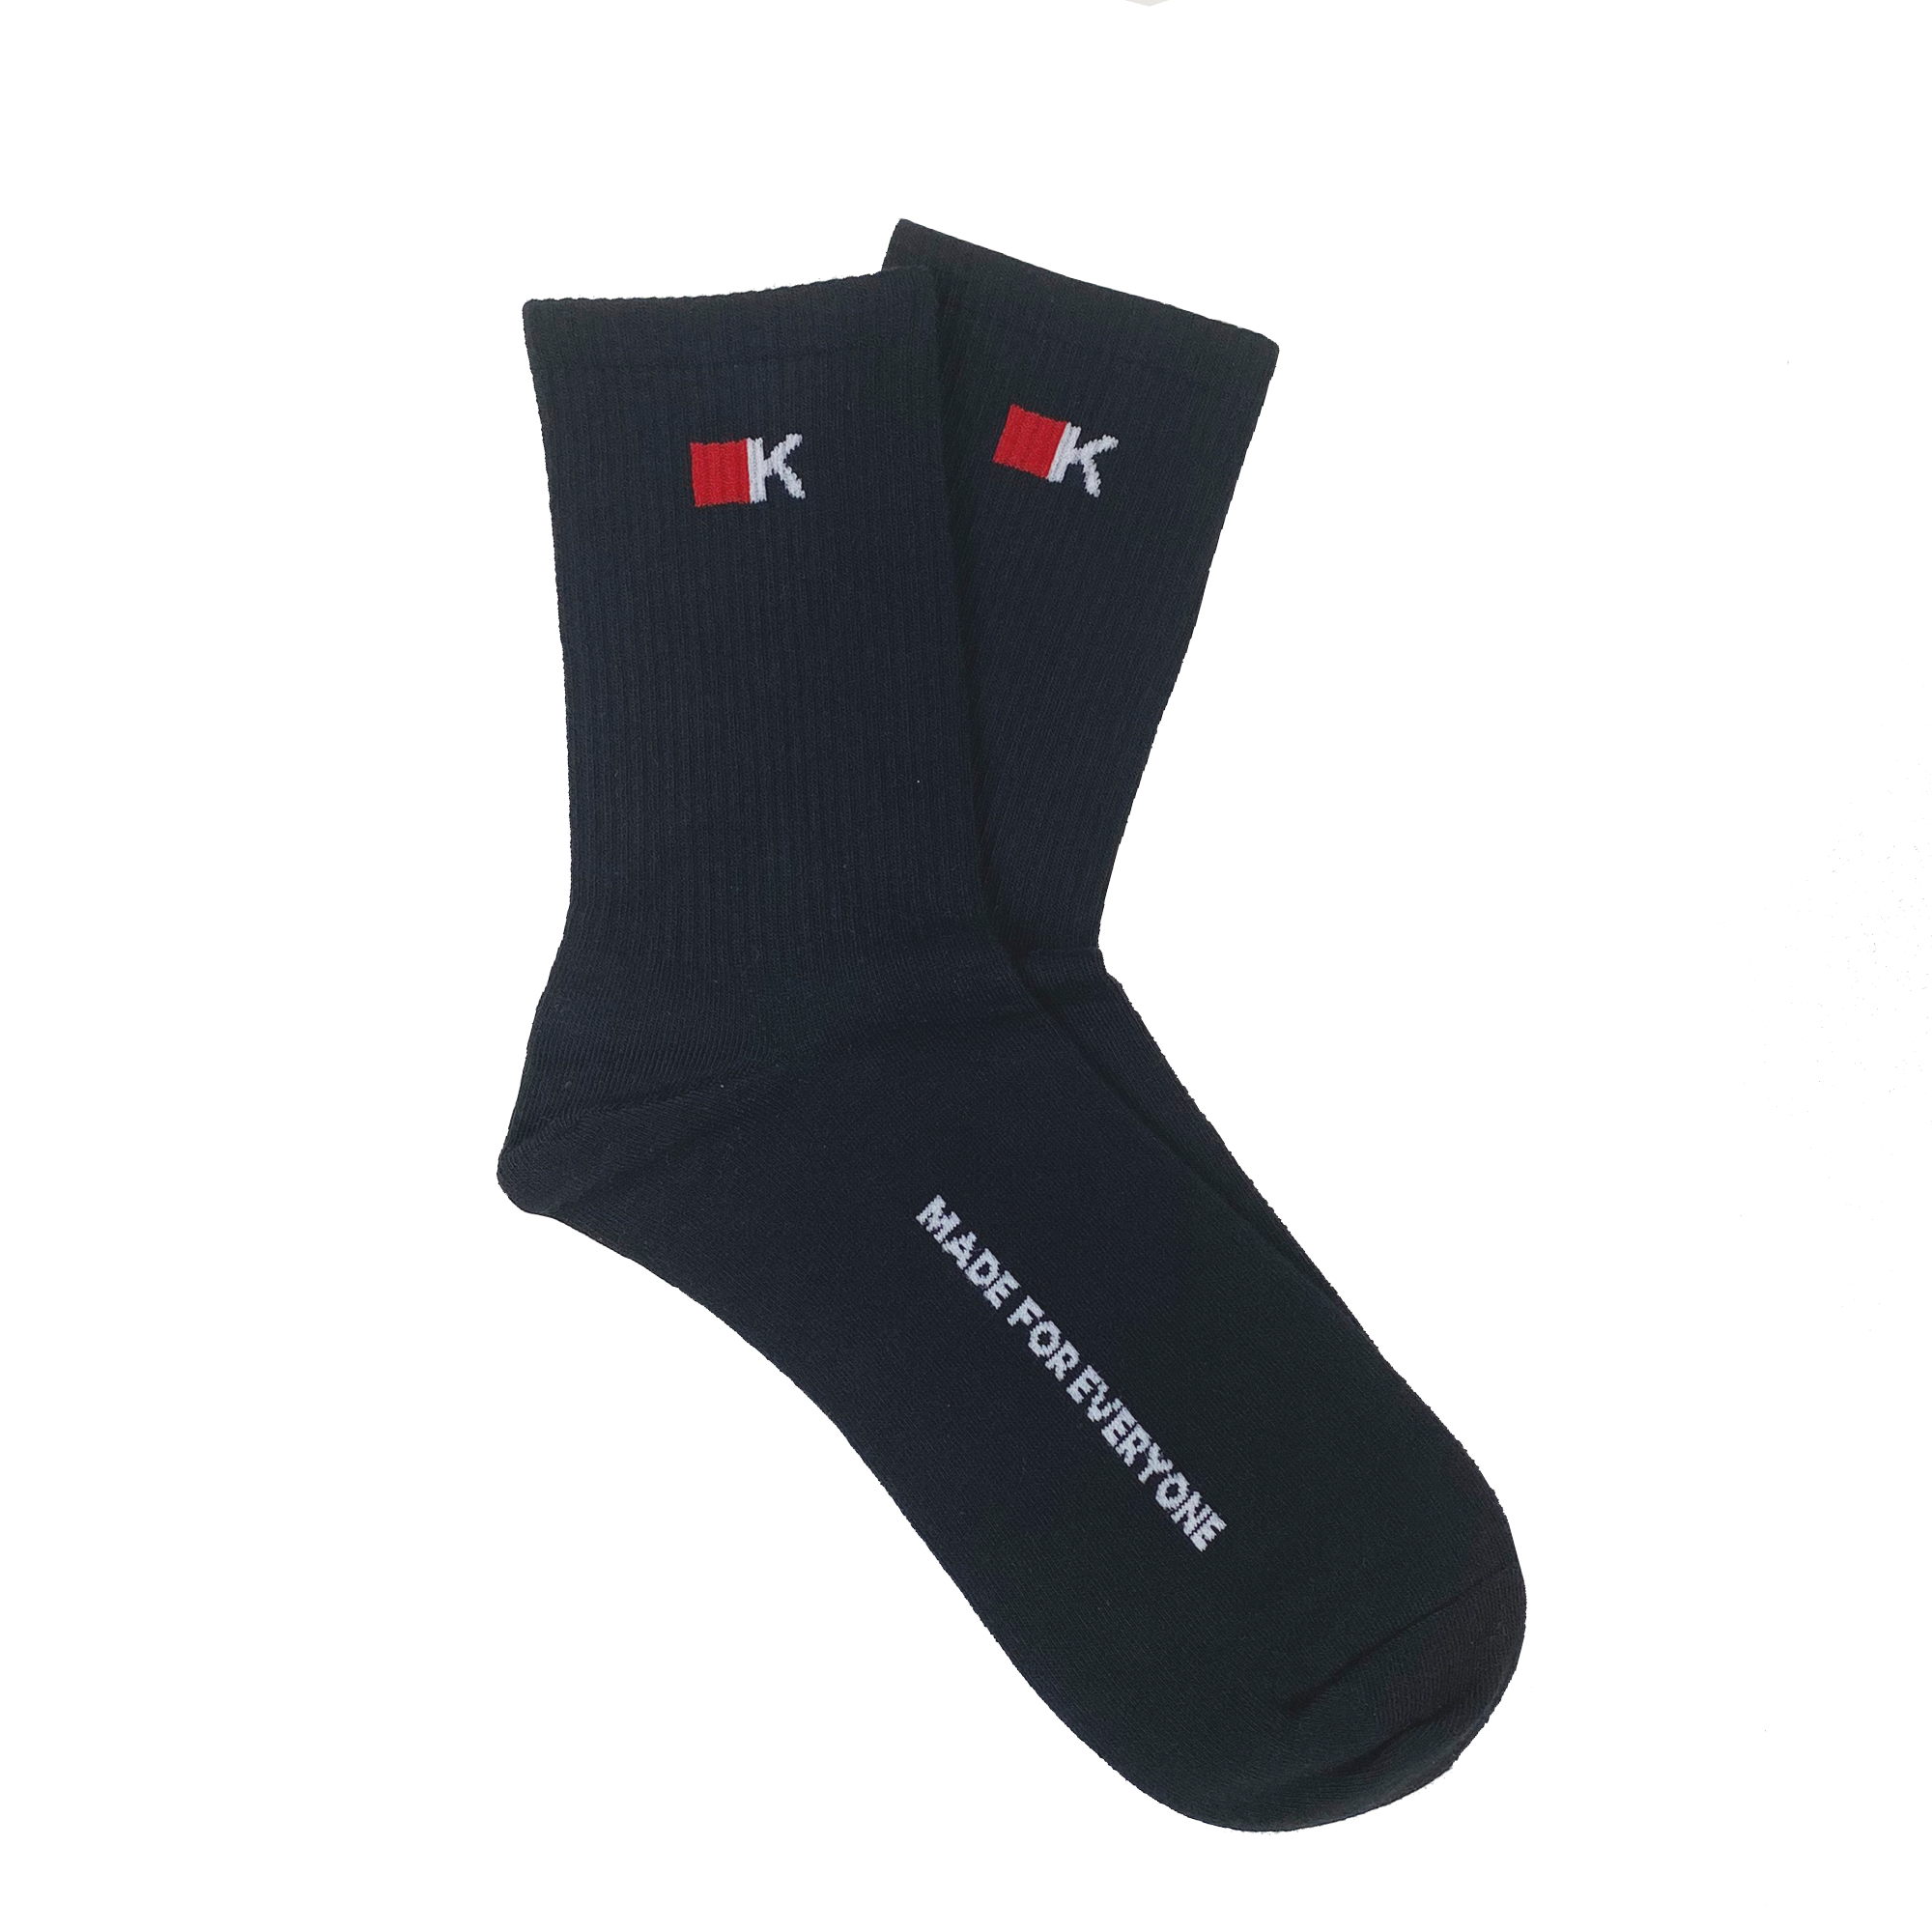 Black "Made For Everyone" Socks